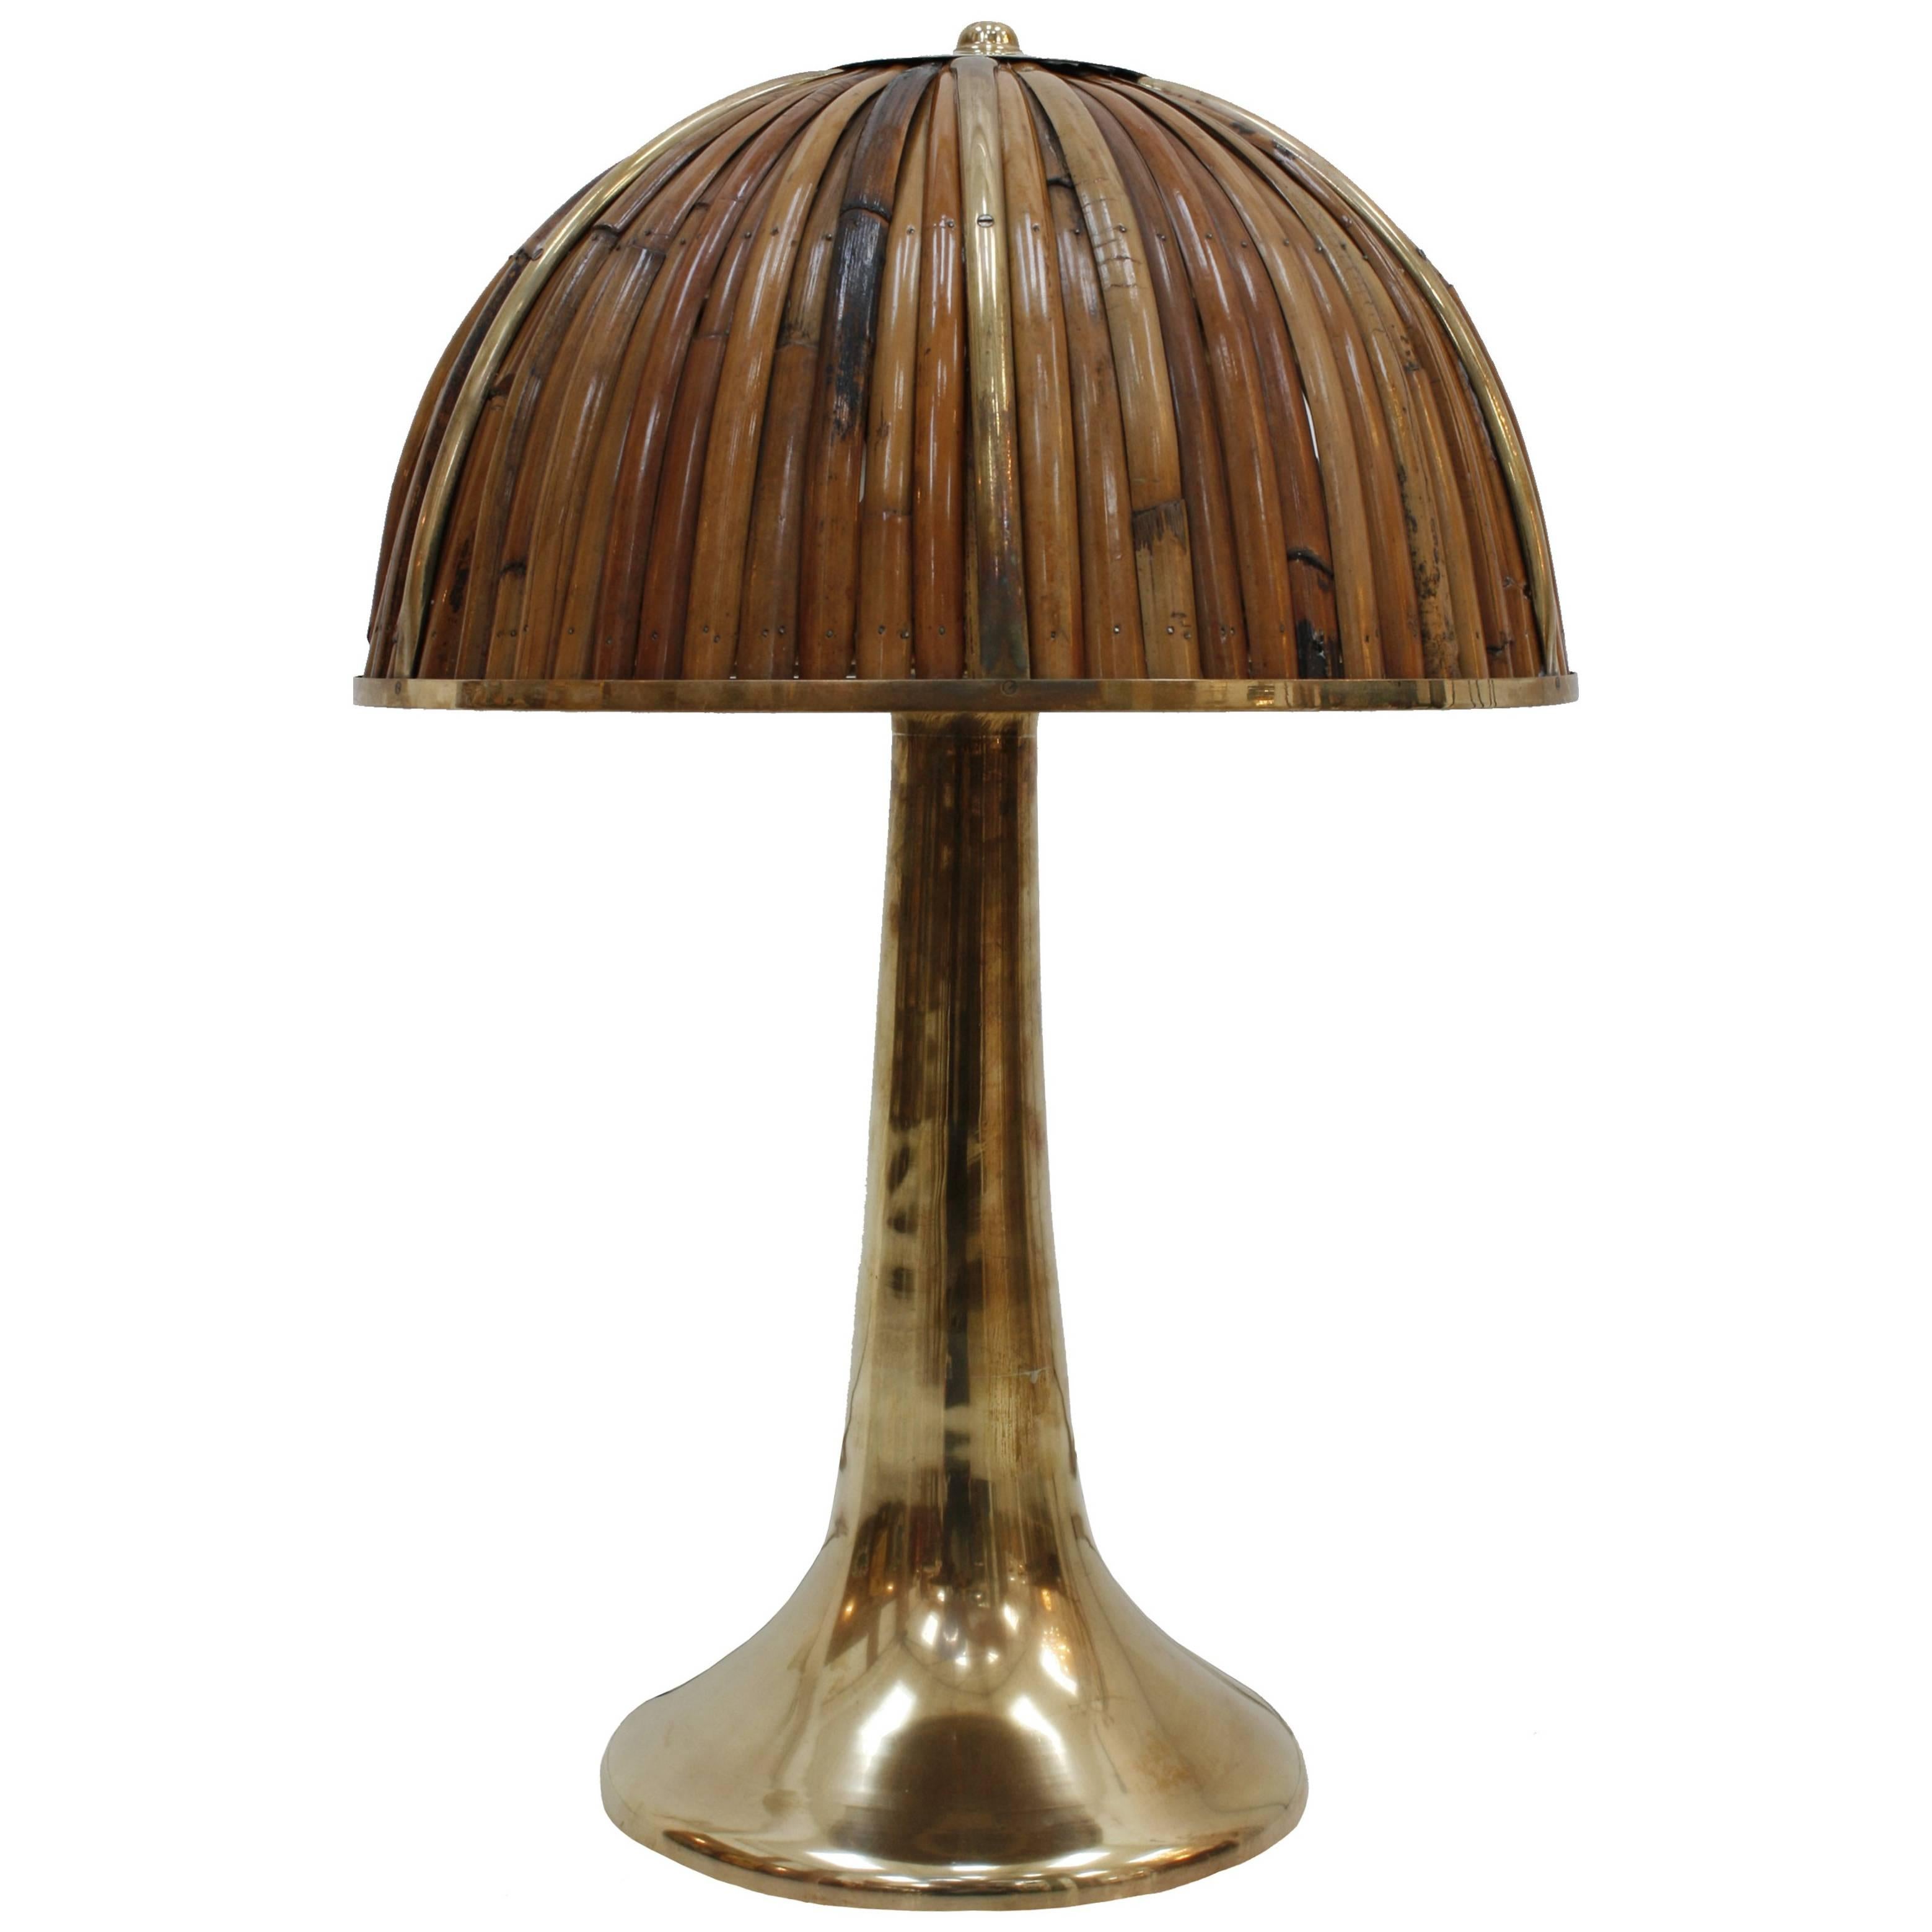 Gabriella Crespi Mid-Century Modern "Fungo" Signed Italian Table Lamp